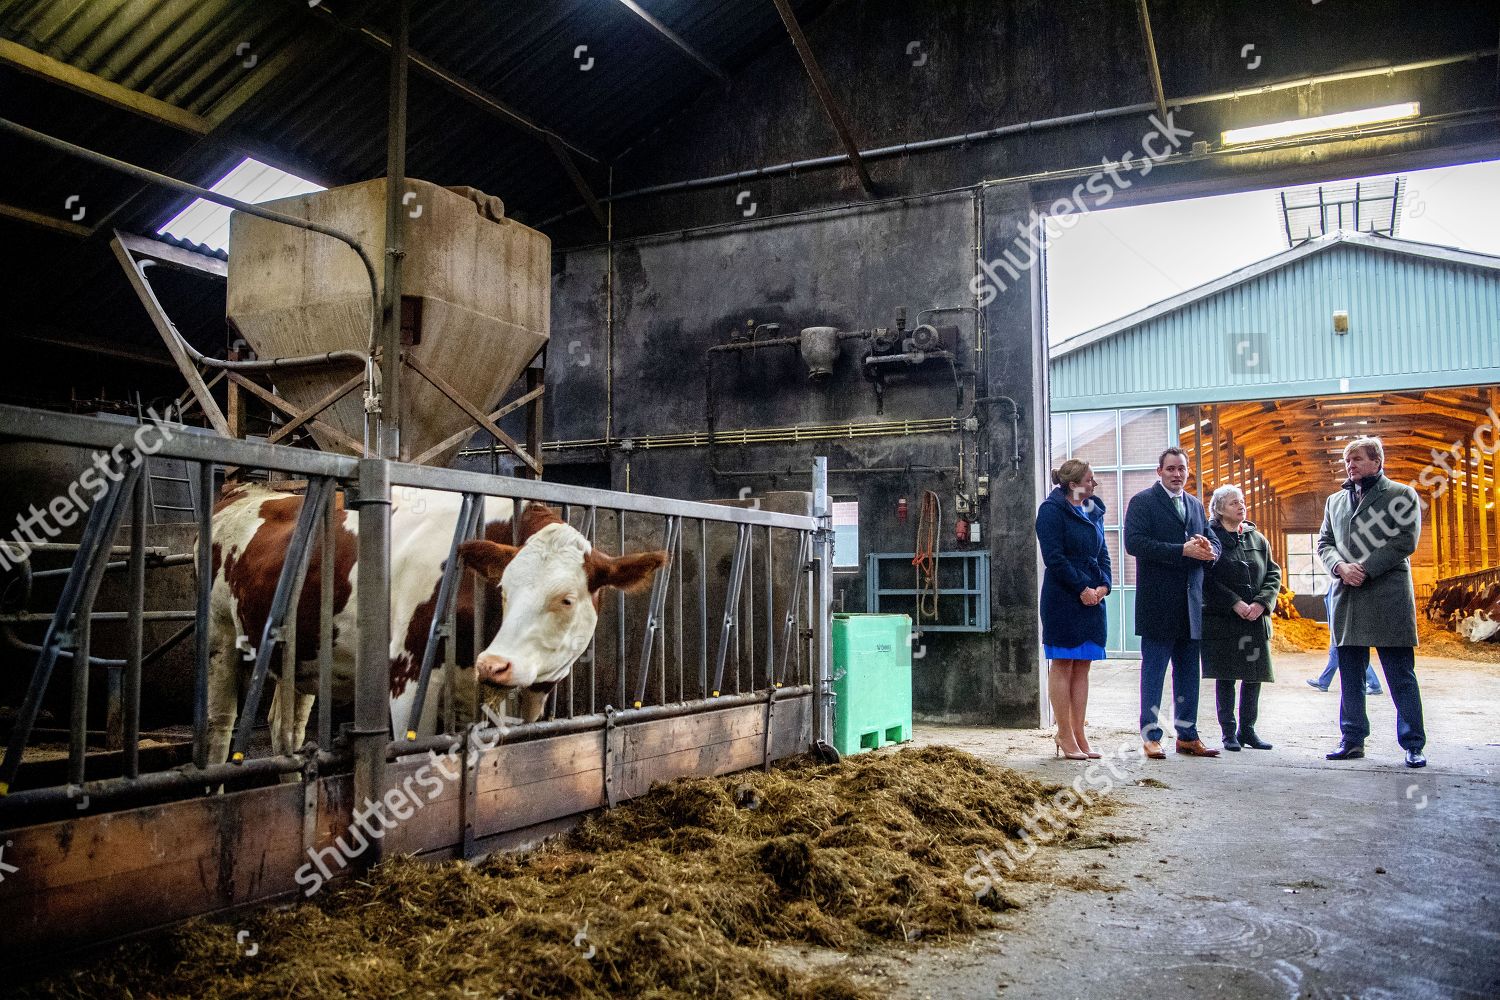 visit-to-dairy-farm-groot-steinfort-joppe-netherlands-shutterstock-editorial-9996881bg.jpg